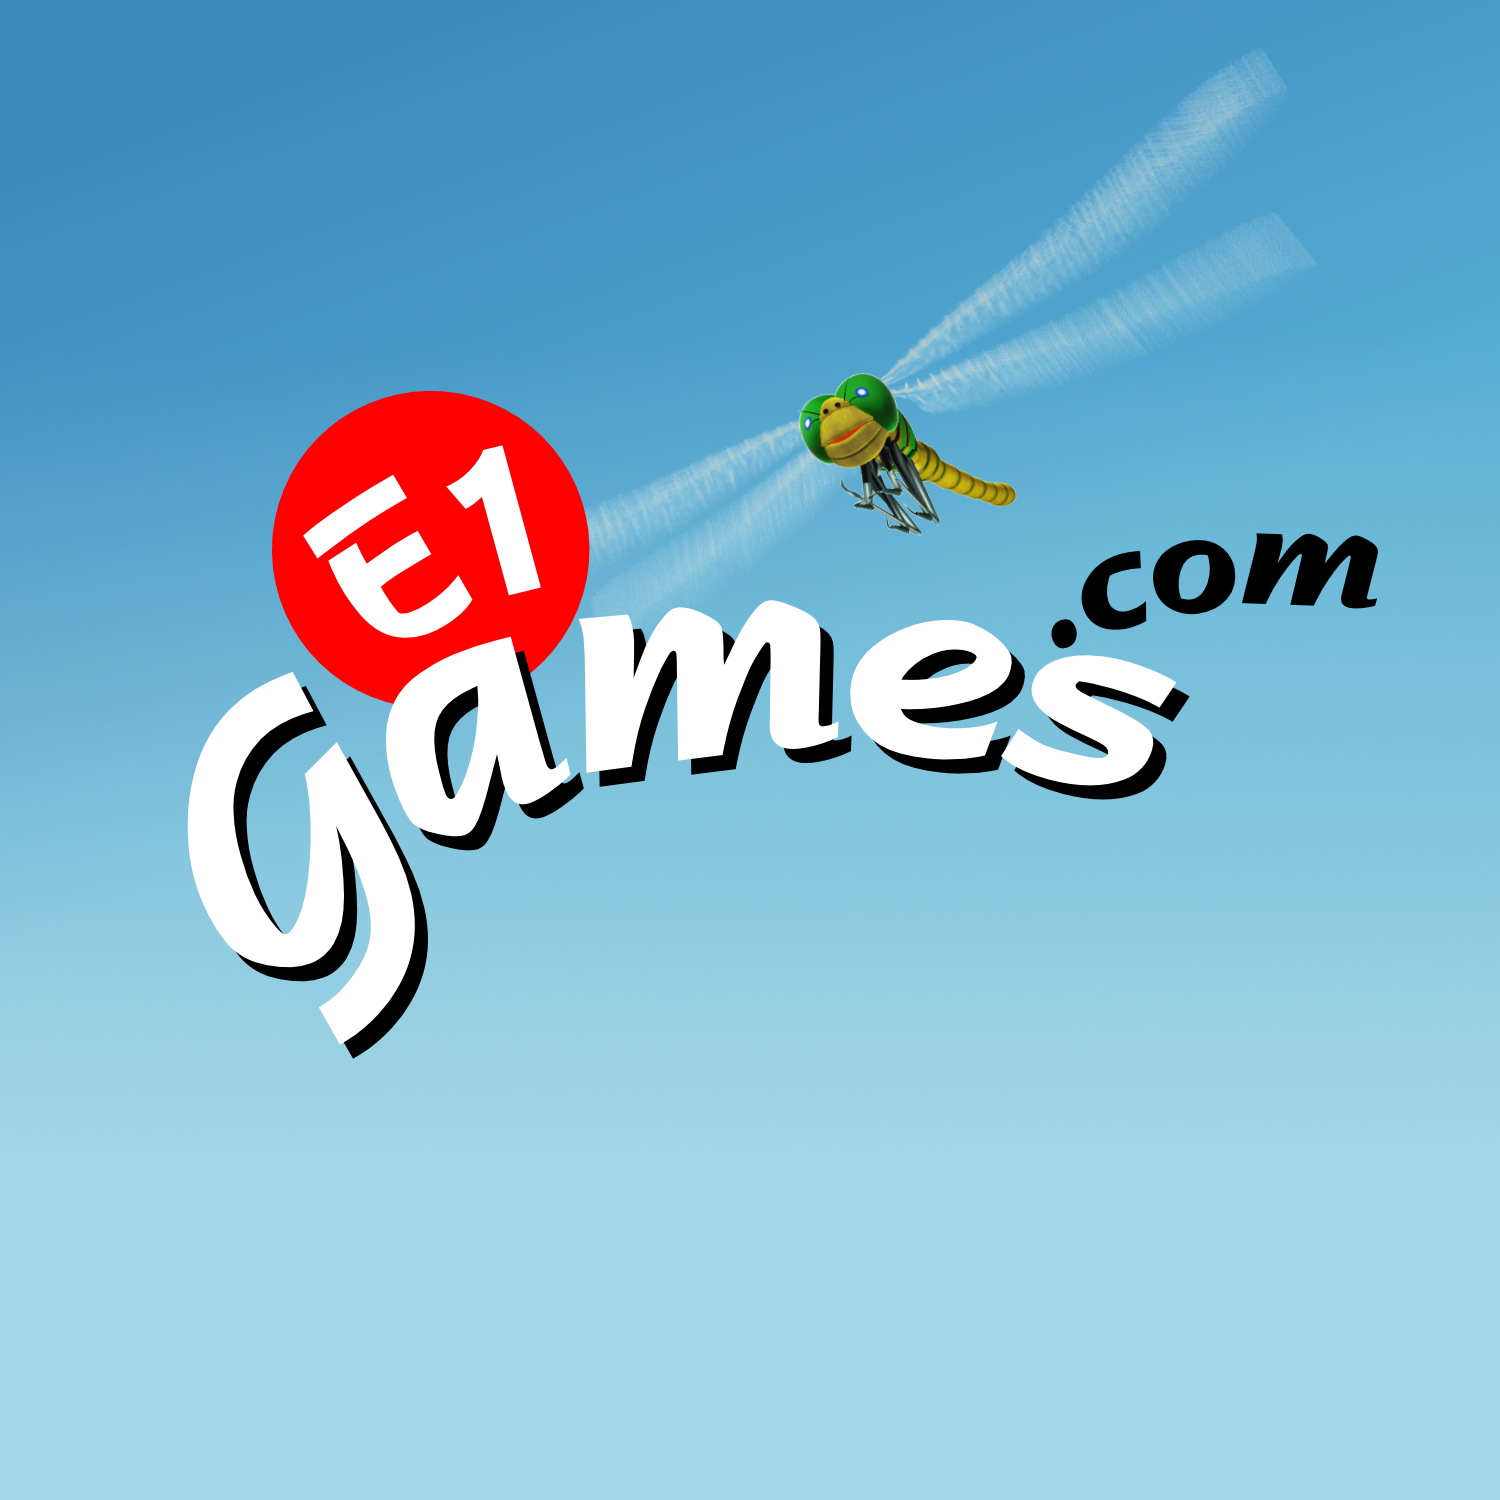 E1Games.com, Dragonfly 3D Character, Branding, Orangebox Digital, Lancs